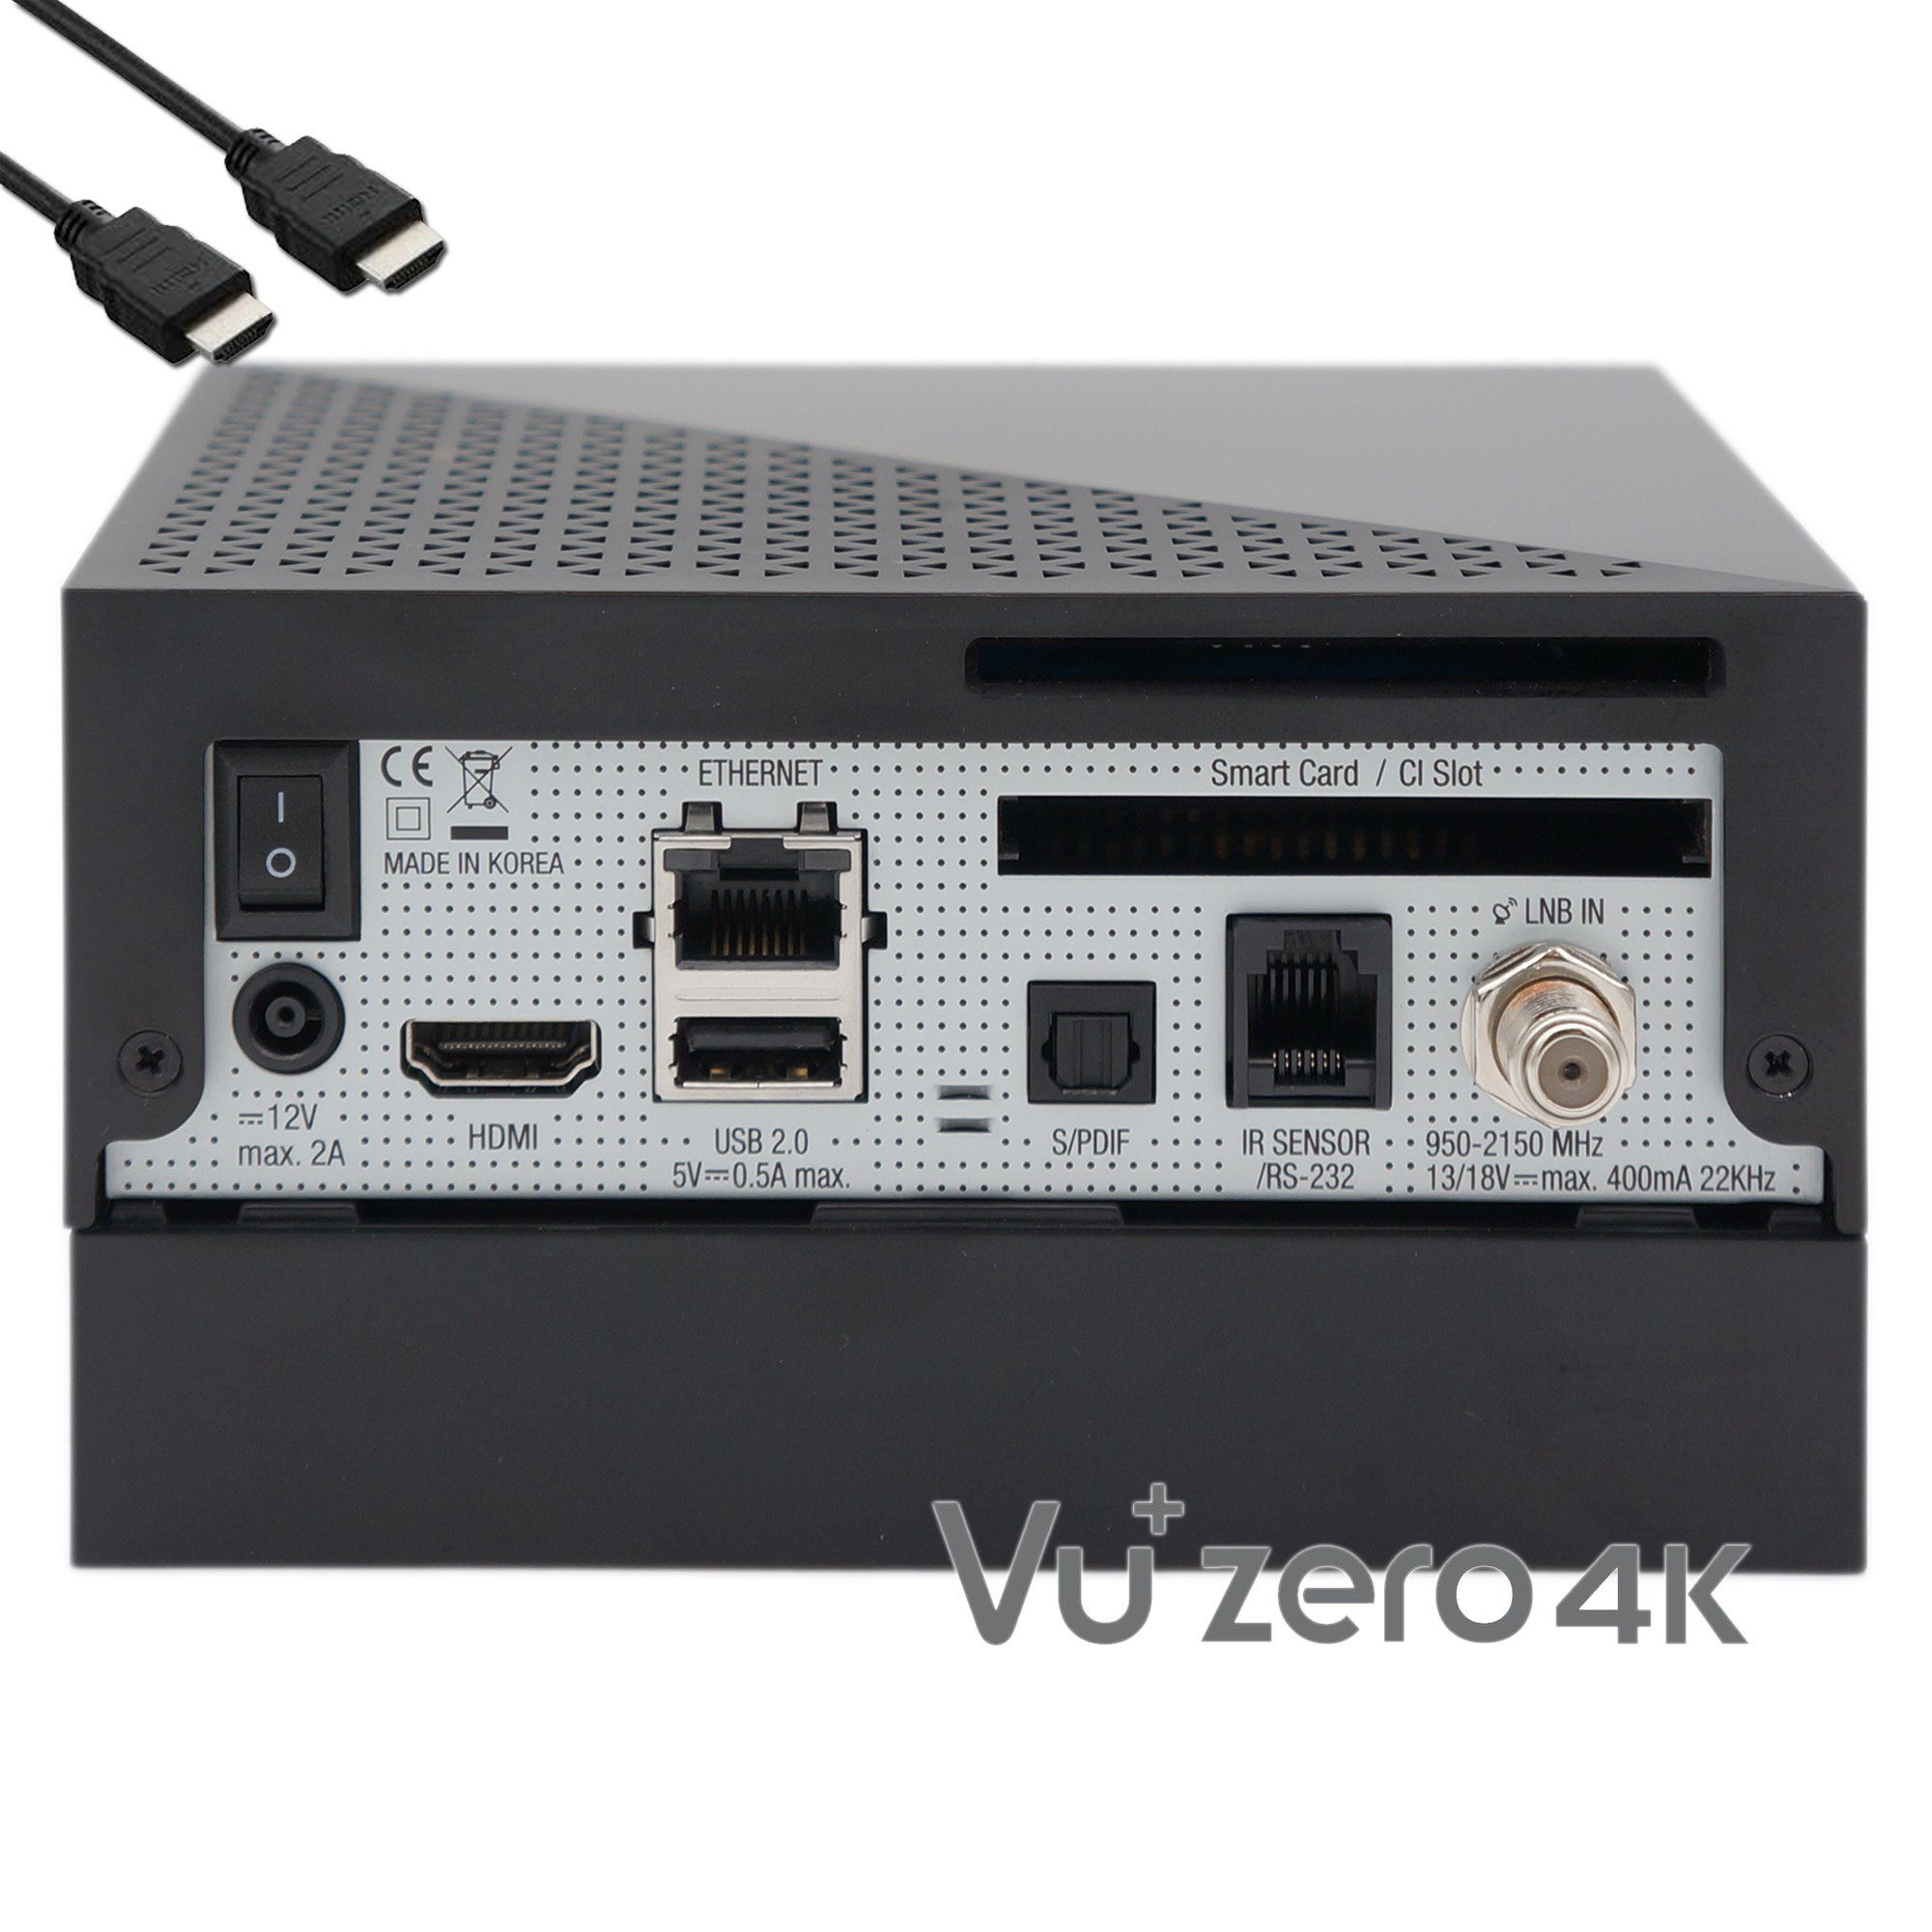 VU+ Zero 4K 1x DVB-S2X + Multistream 1TB und UHD Linux 300 Receiver HDD SAT-Receiver